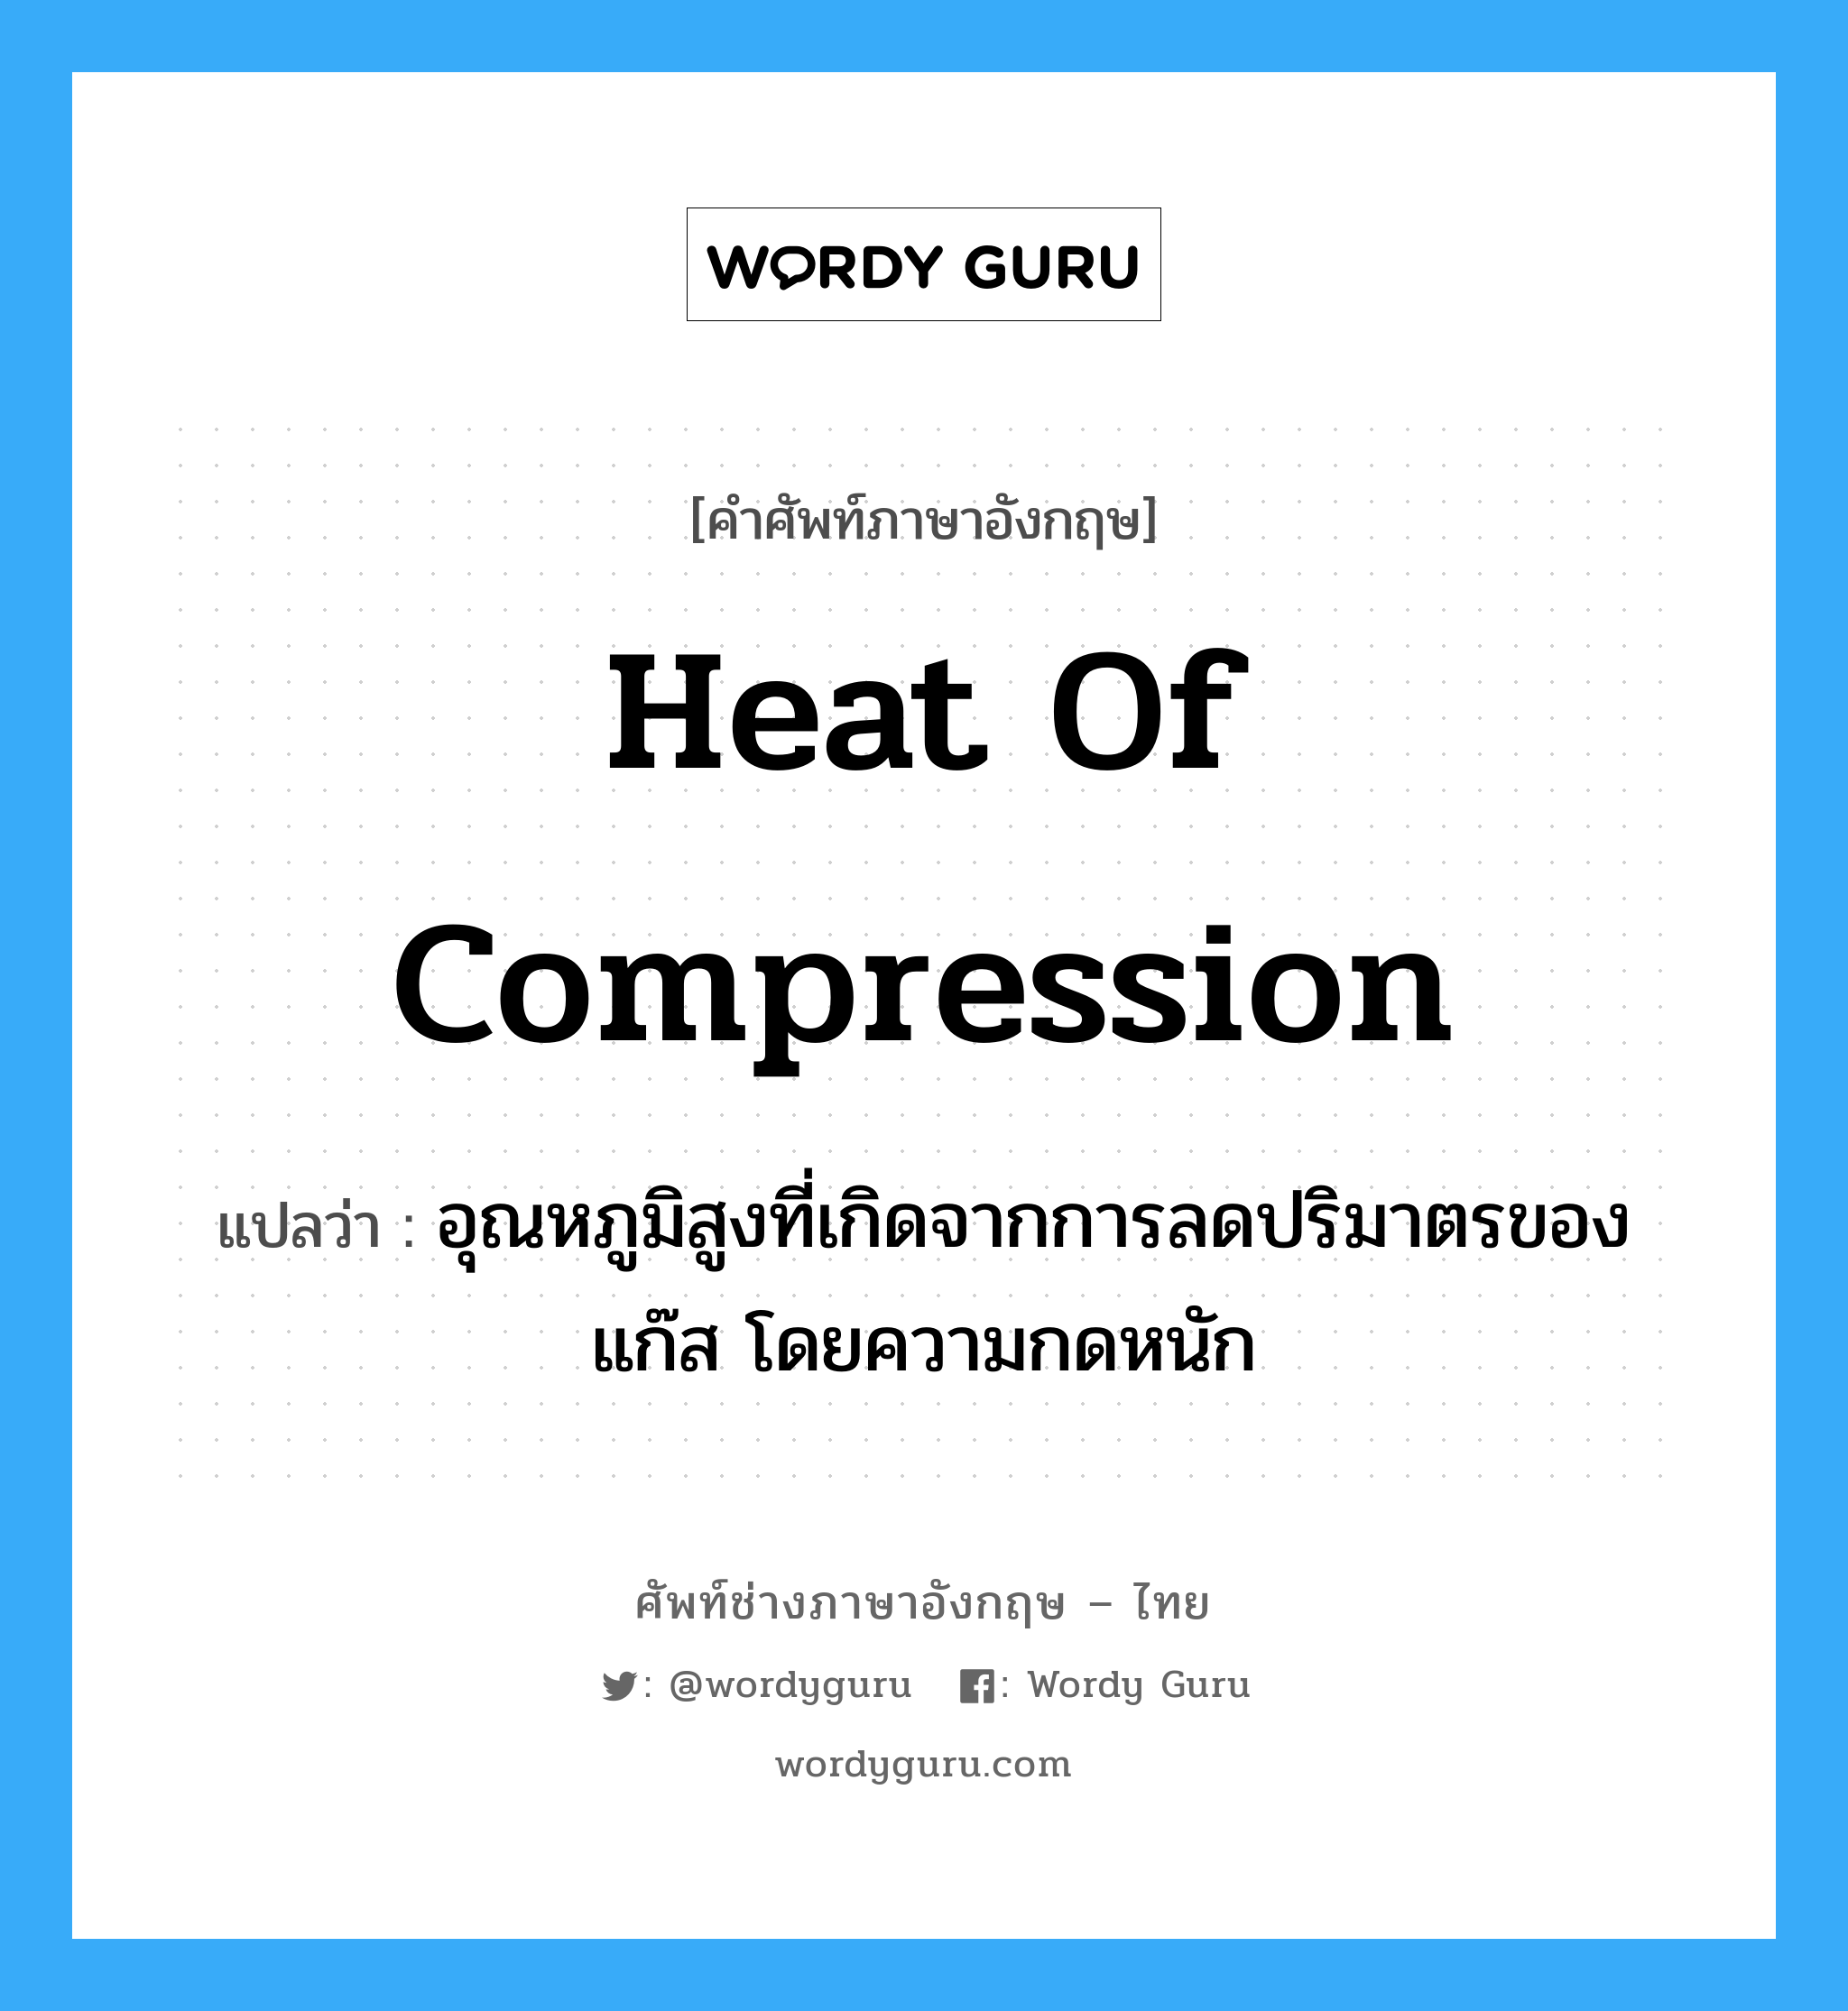 heat of compression แปลว่า?, คำศัพท์ช่างภาษาอังกฤษ - ไทย heat of compression คำศัพท์ภาษาอังกฤษ heat of compression แปลว่า อุณหภูมิสูงที่เกิดจากการลดปริมาตรของแก๊ส โดยความกดหนัก